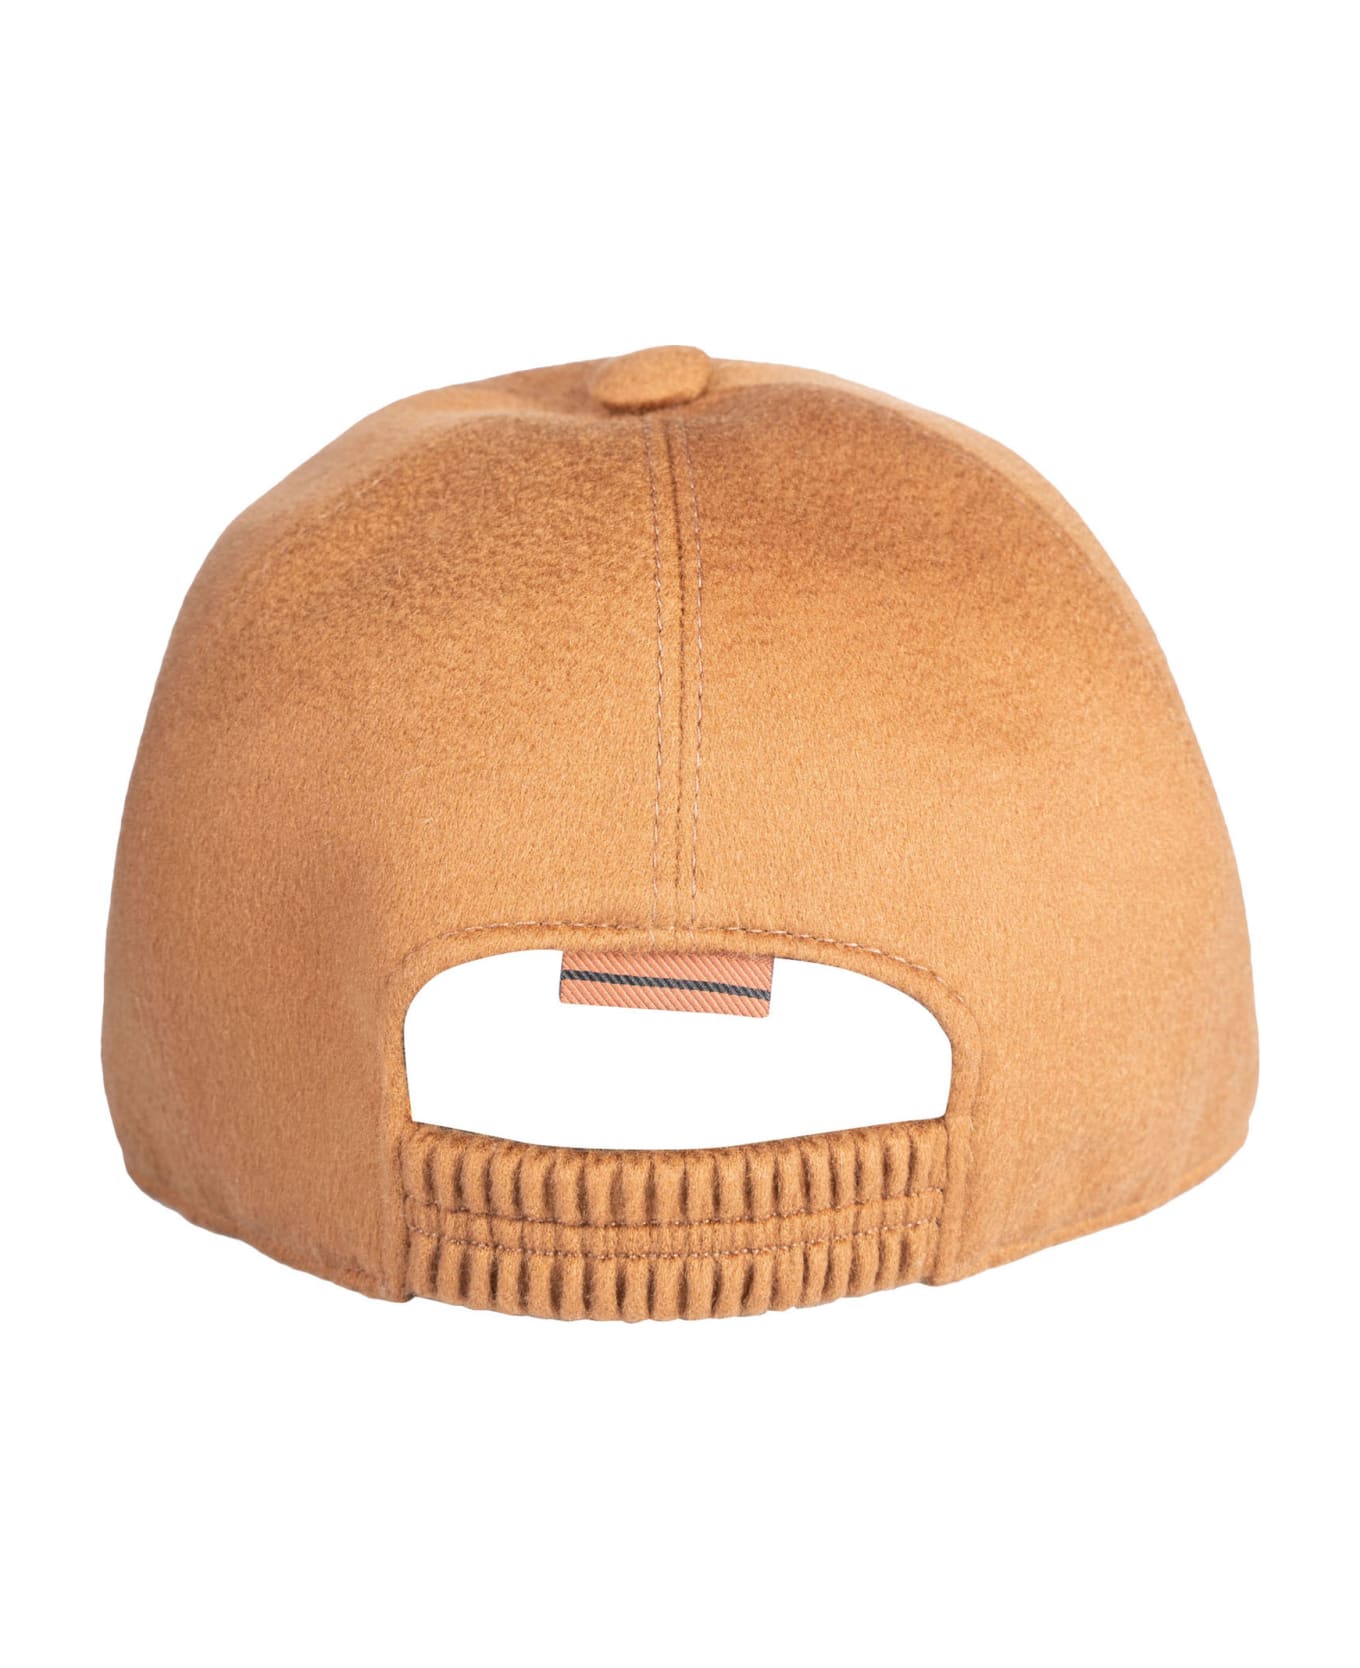 Zegna Classic Fitted Baseball Cap - Vjc 帽子